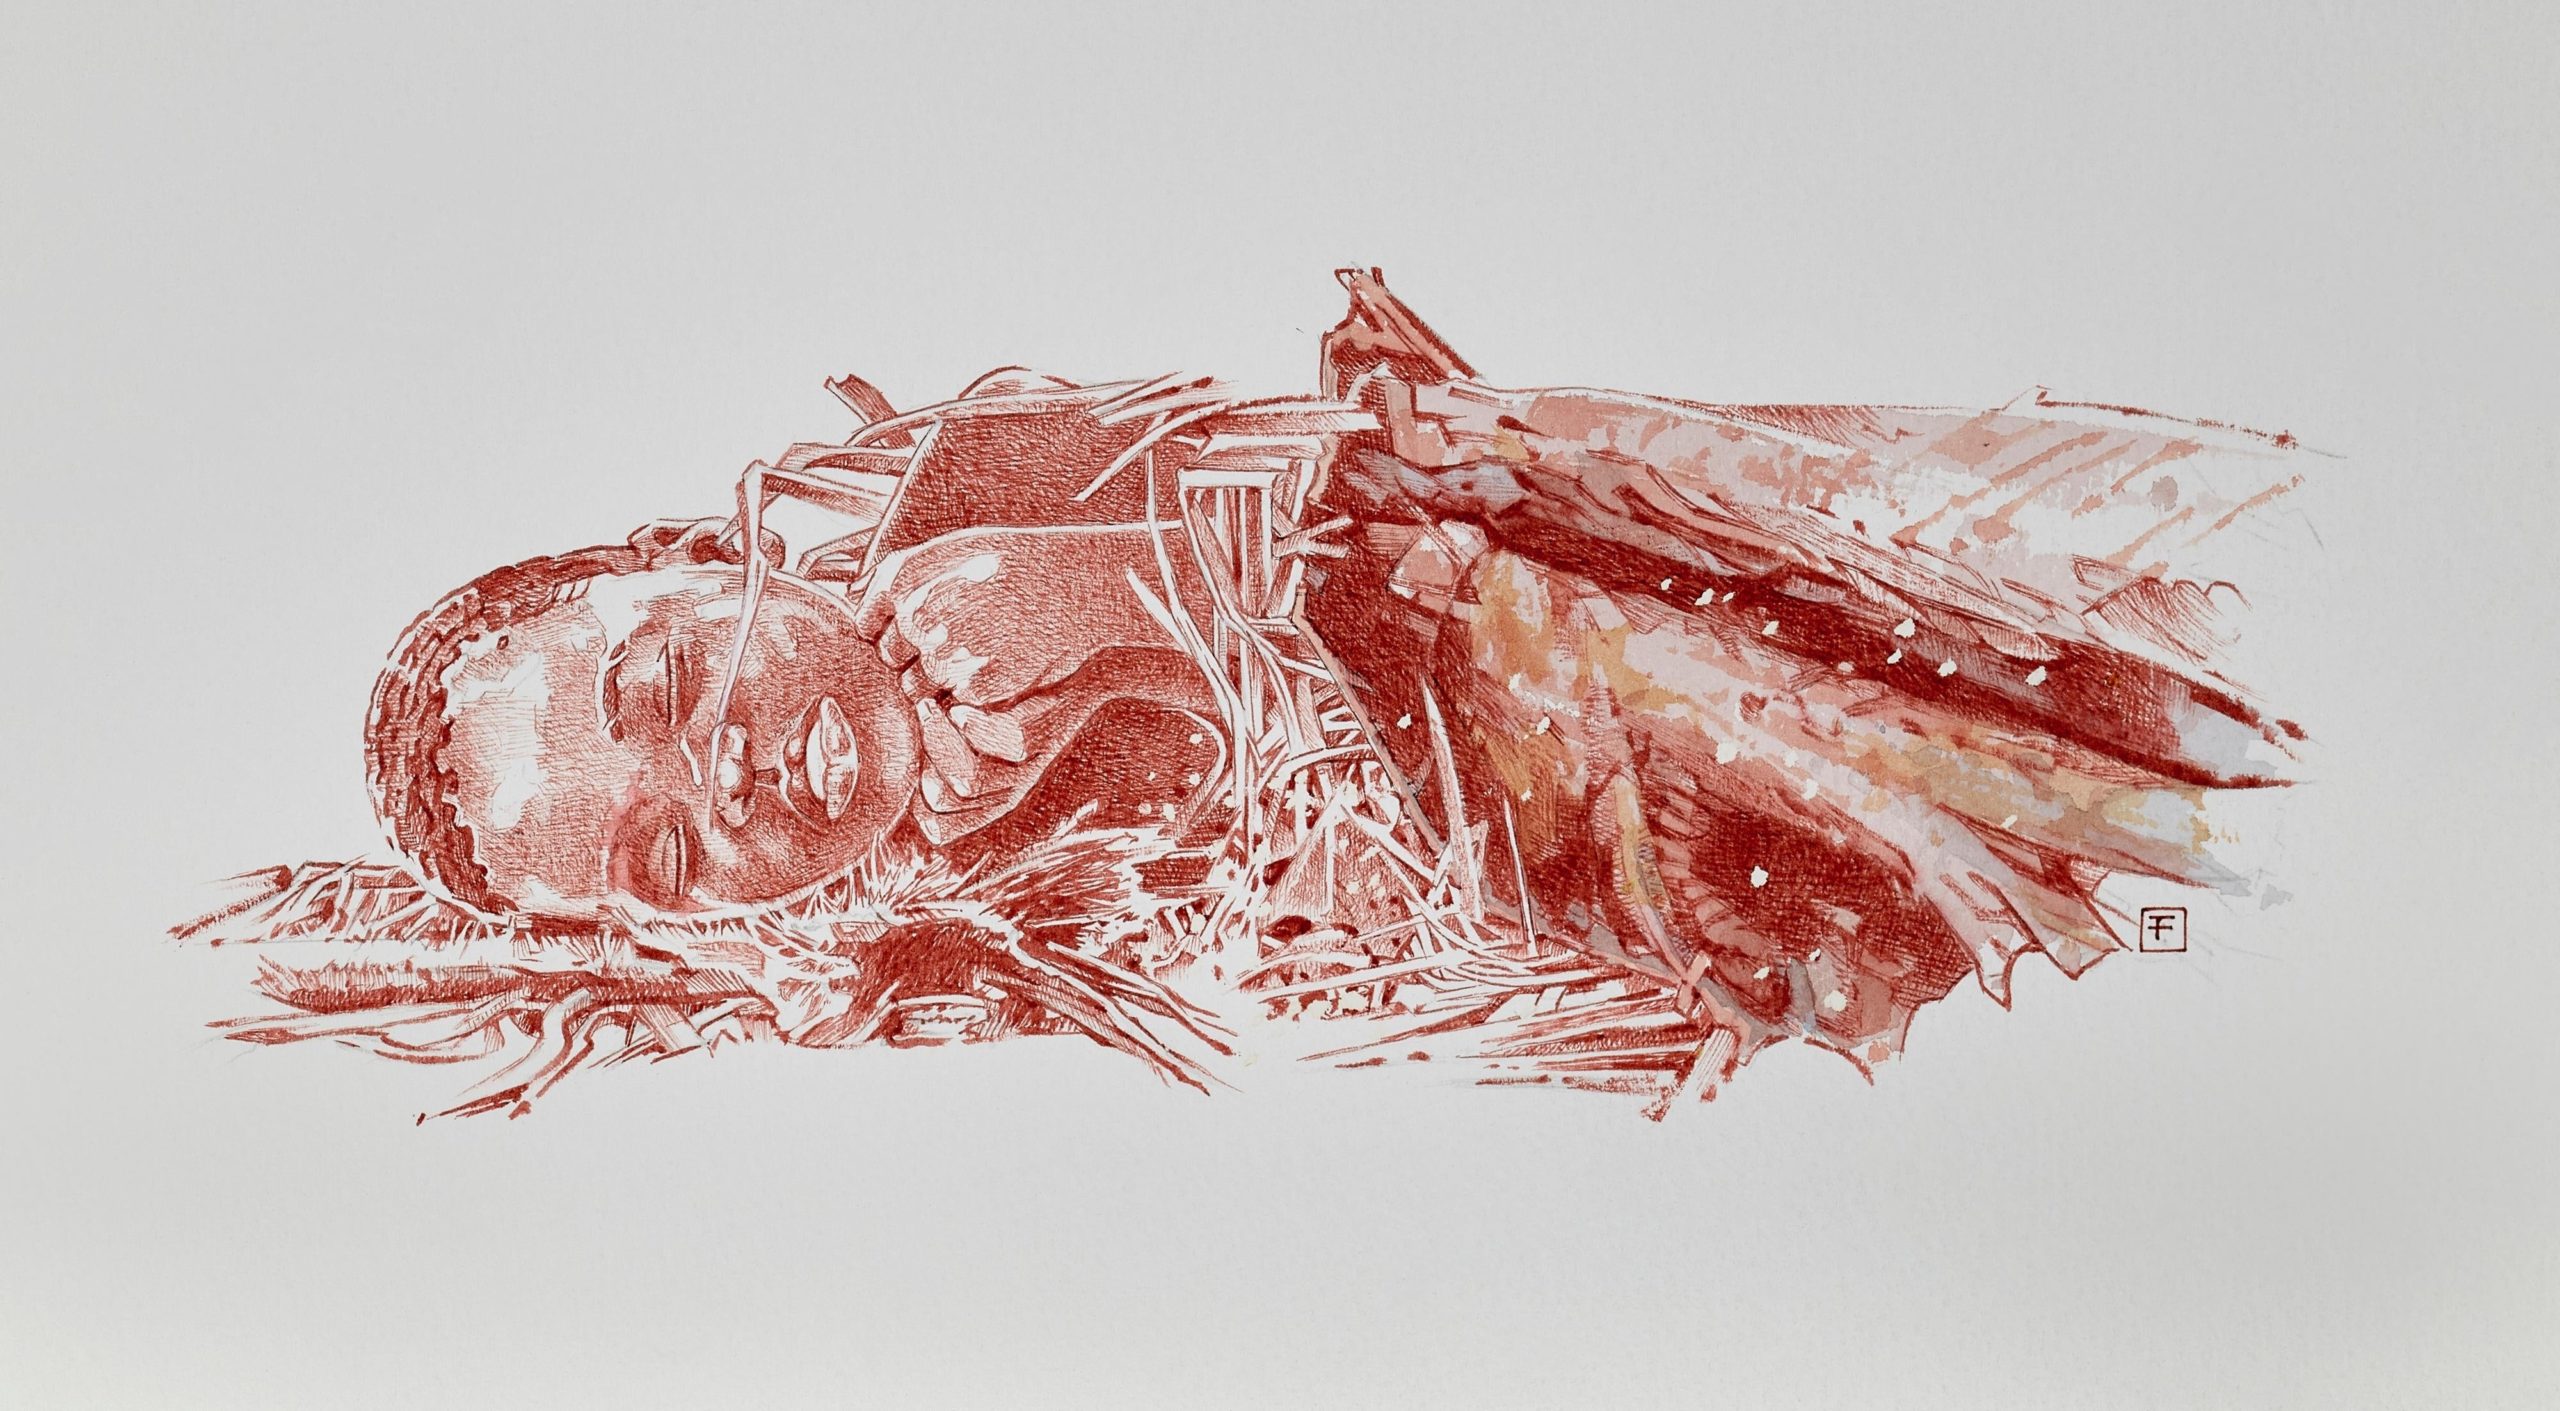 Artist's interpretation of Mtoto's burial. (Illustration: Fernando Fueyo)